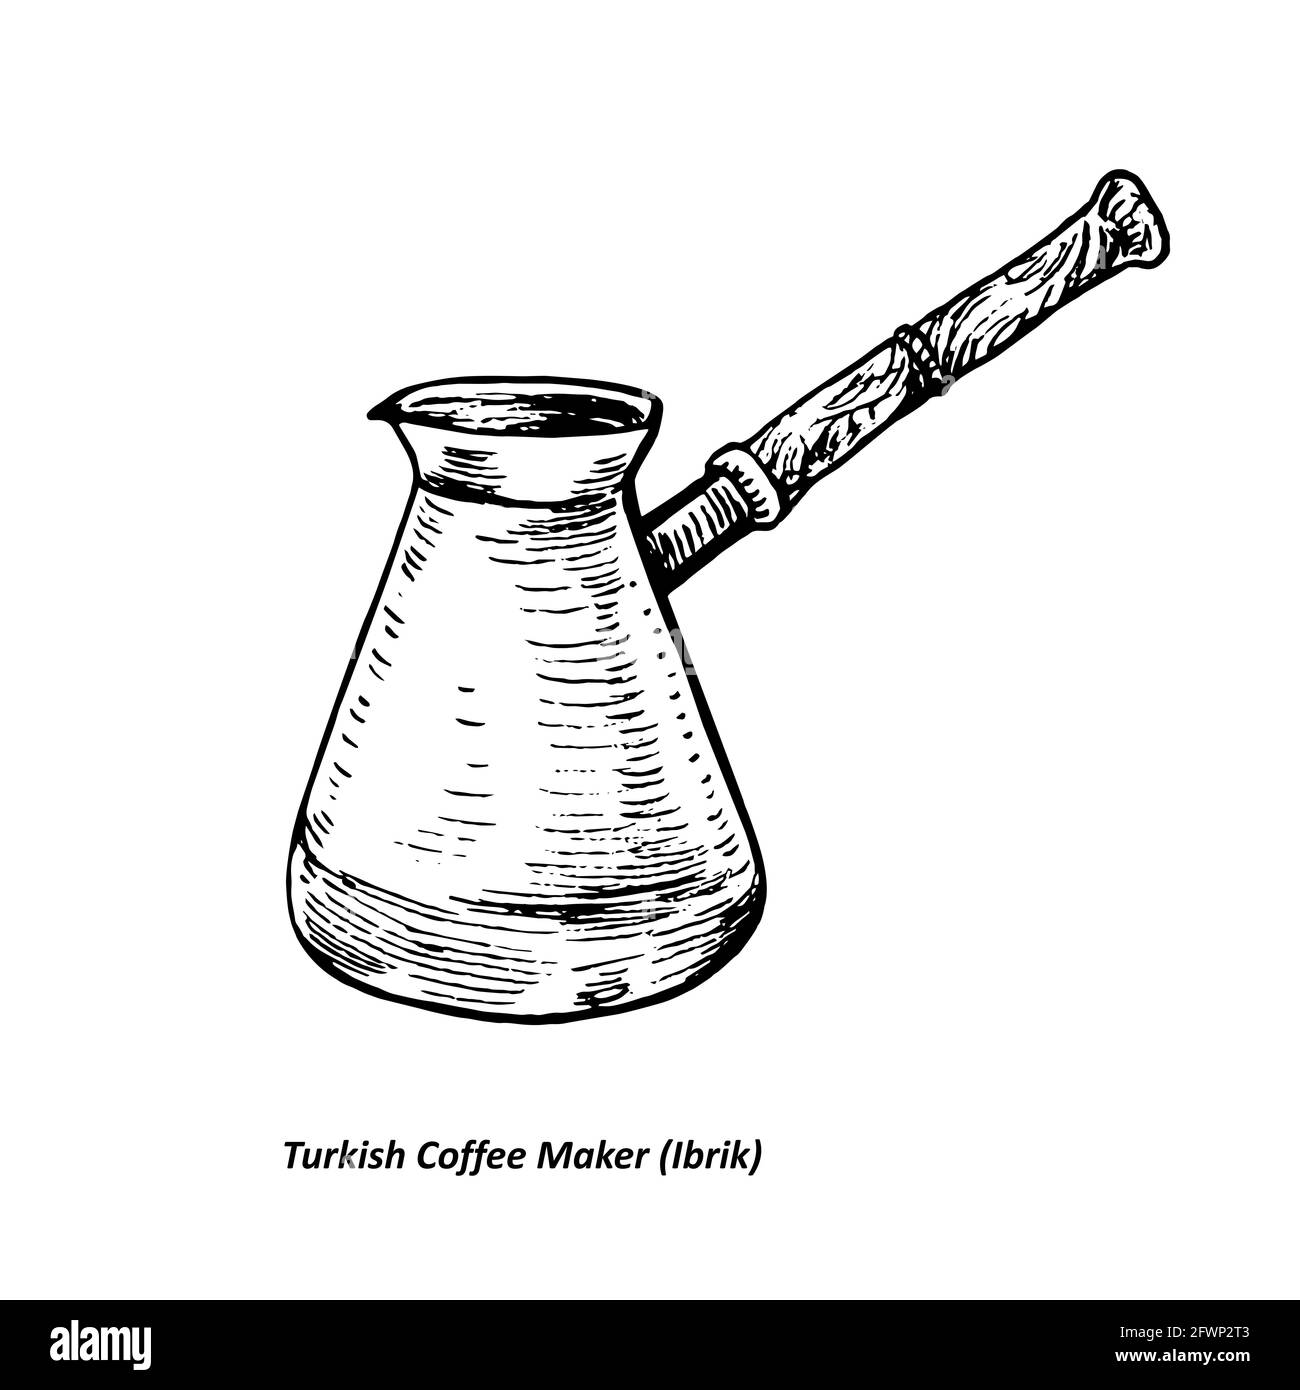 Turkish coffee maker (Ibrik), gravure style ink drawing illustration with handwritten inscription Stock Photo